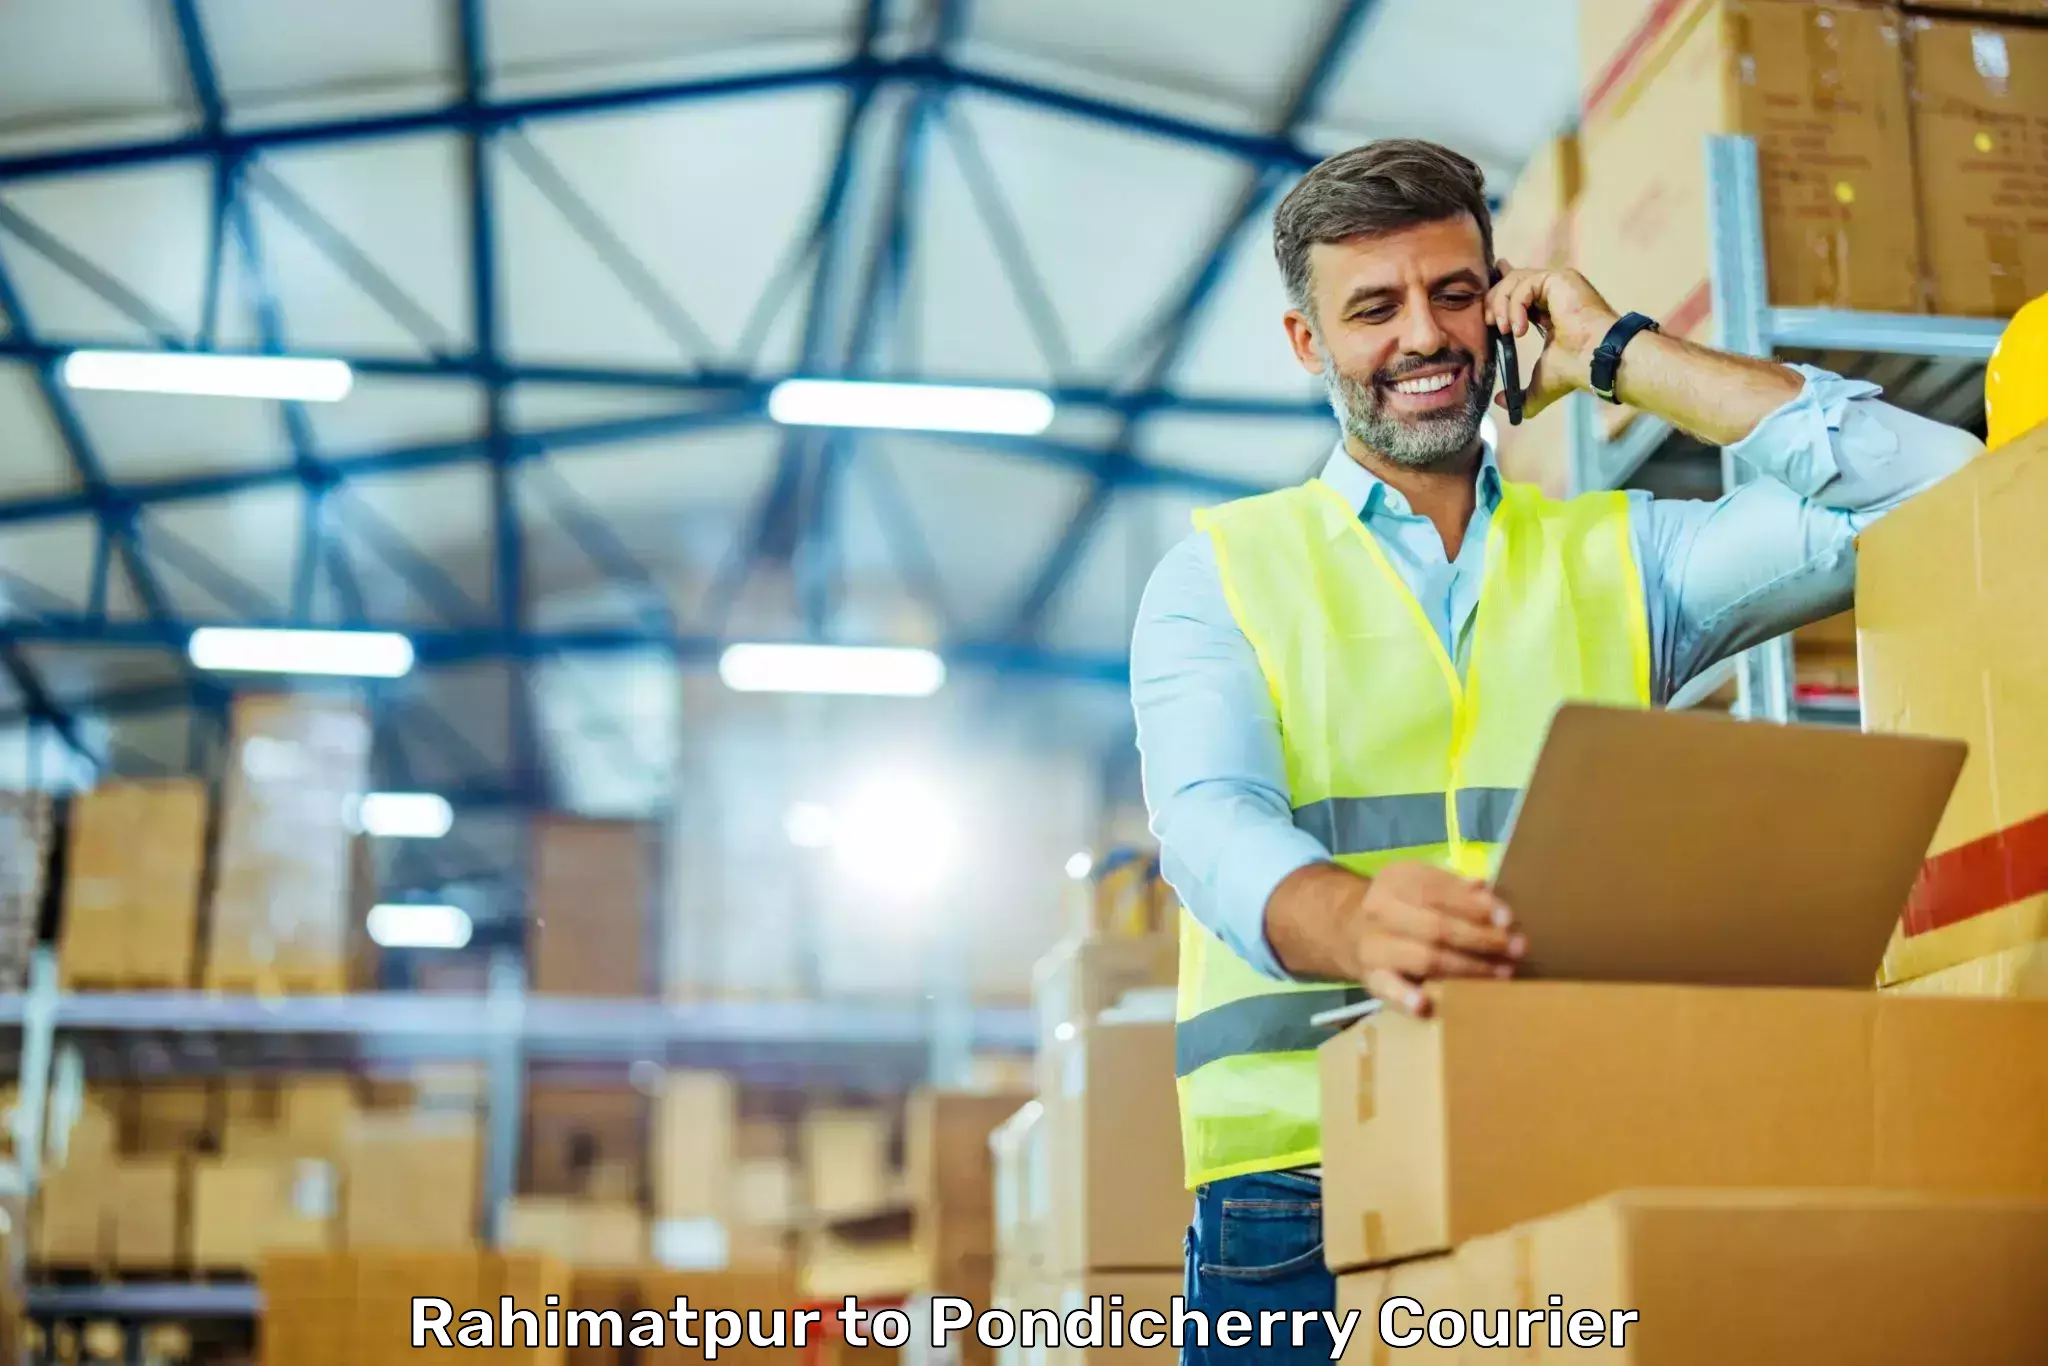 Professional courier handling Rahimatpur to Metttupalayam